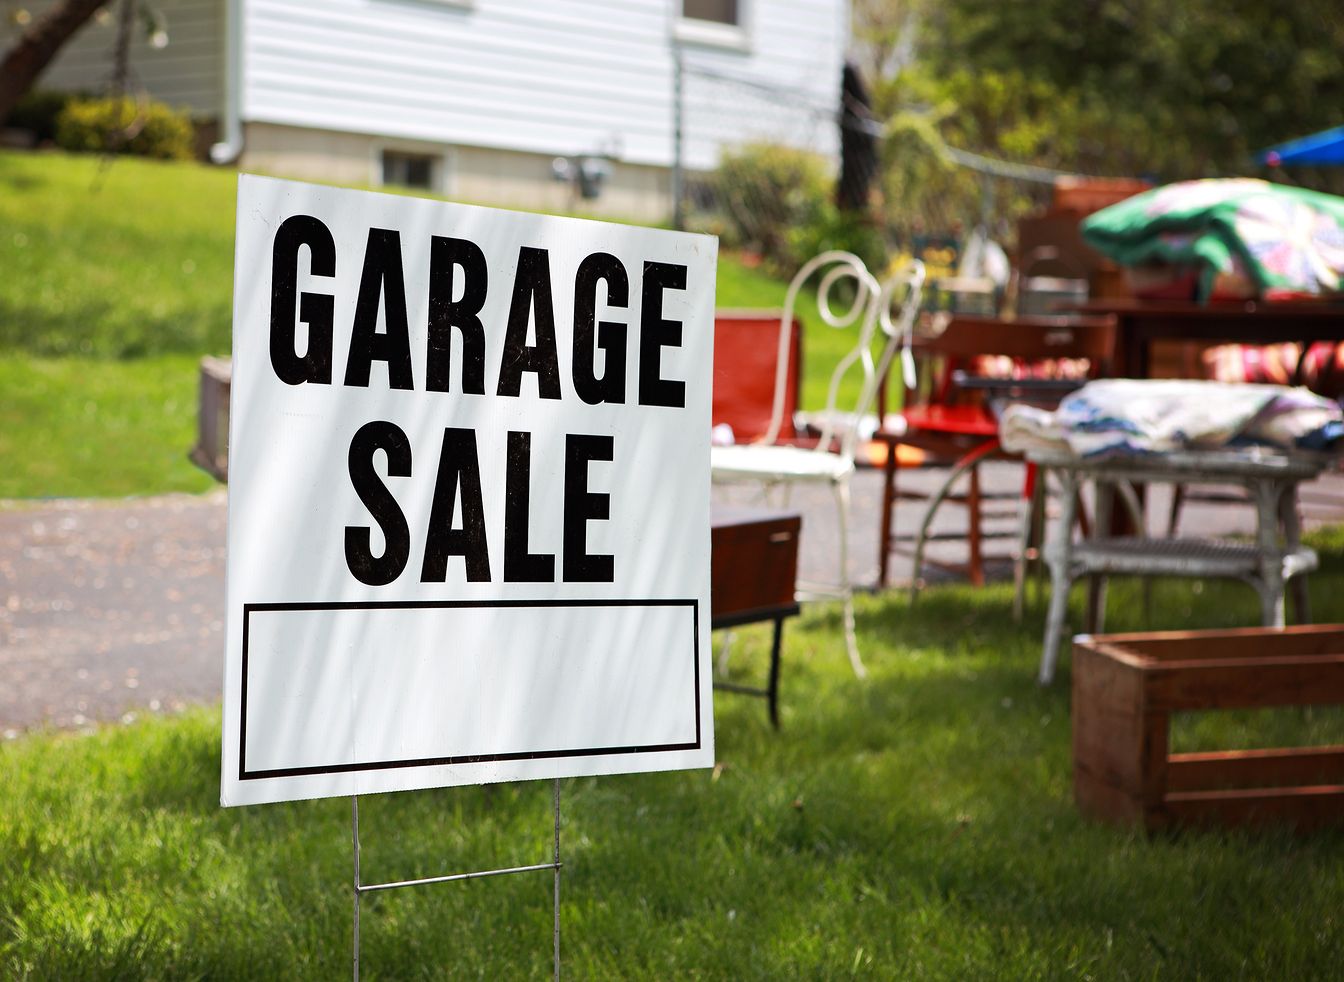 bigstock-Garage-sale-sign-on-the-lawn-o-239642008%20-%20Copy.jpg